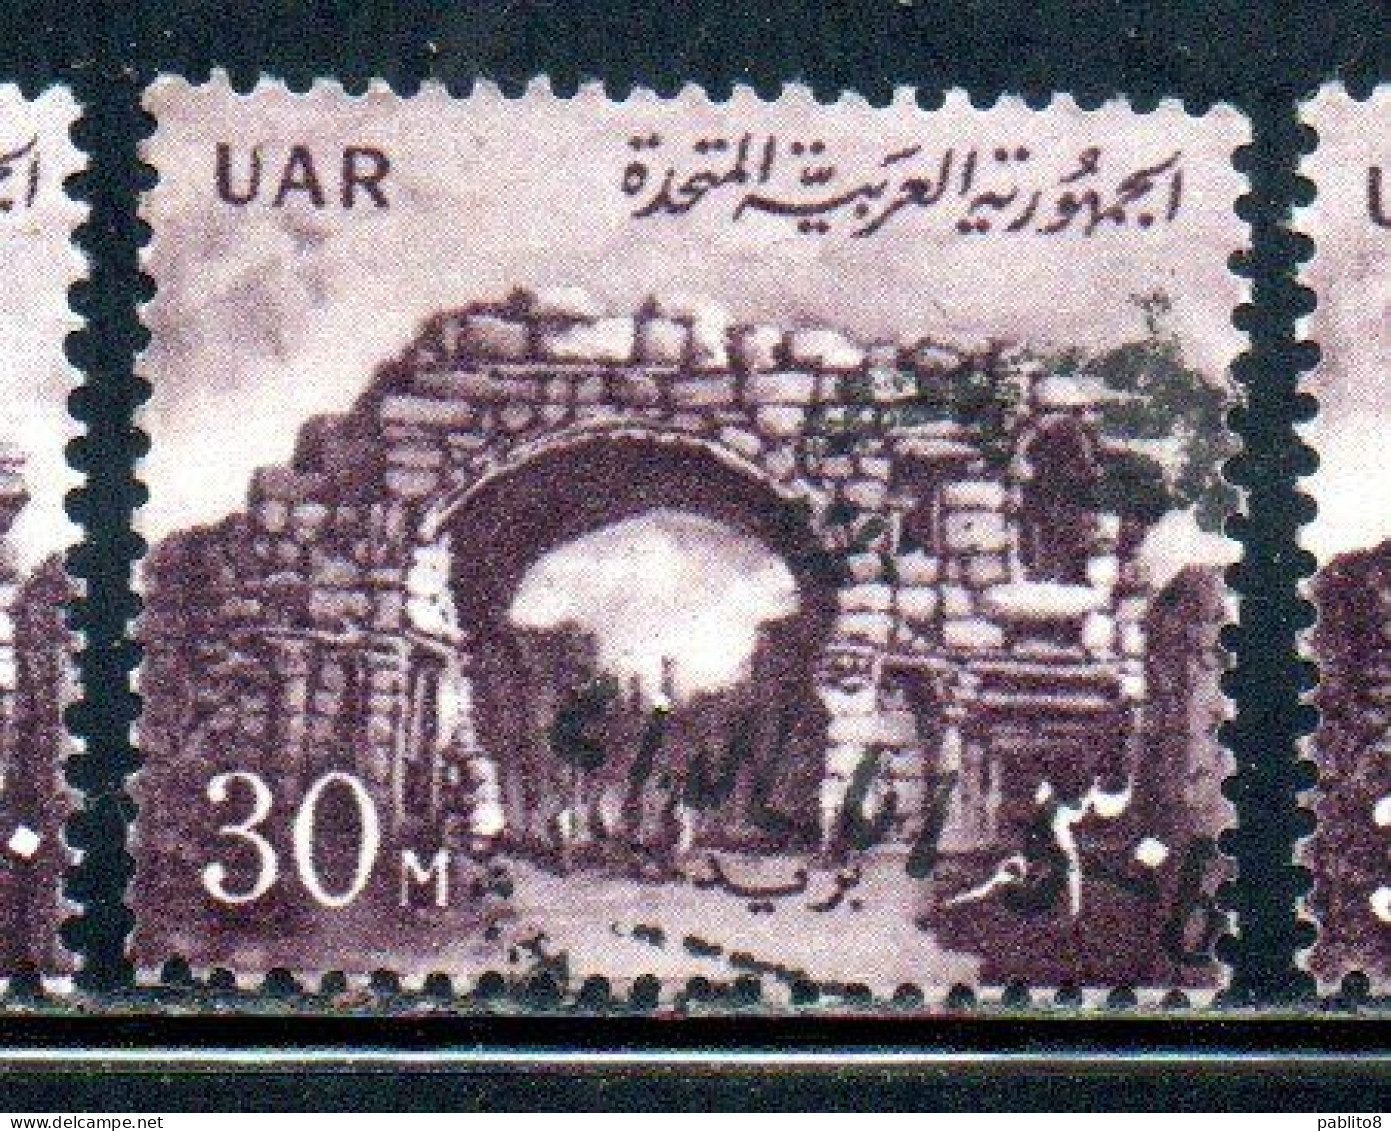 UAR EGYPT EGITTO 1959 1960 ST. SIMON'S GATE BOSRA SYRIA  30m MH - Unused Stamps